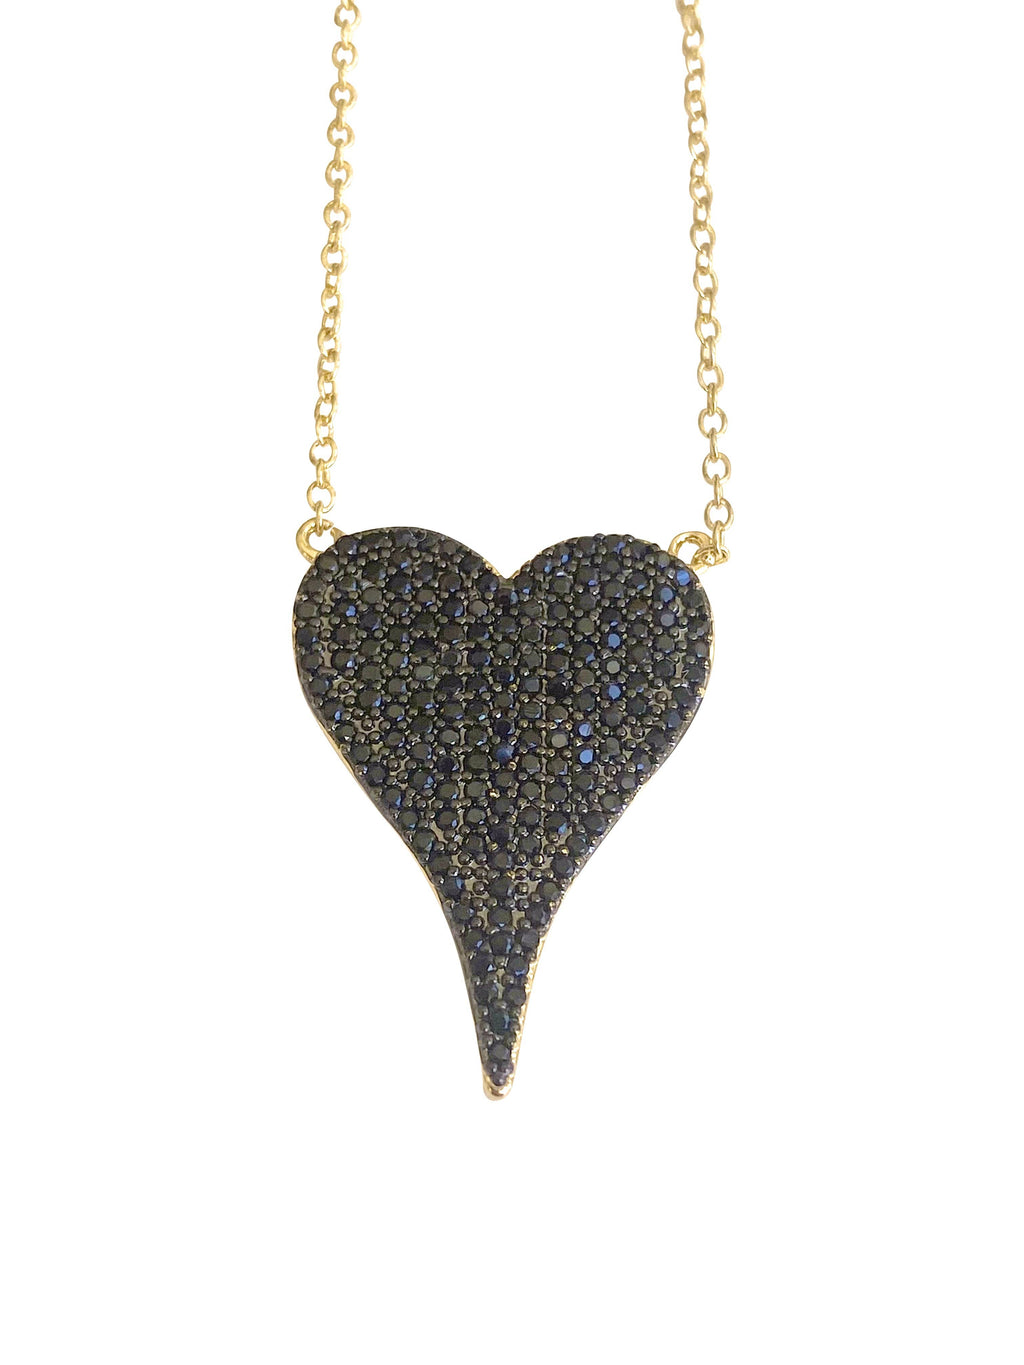 Bling Heart Necklace: Black